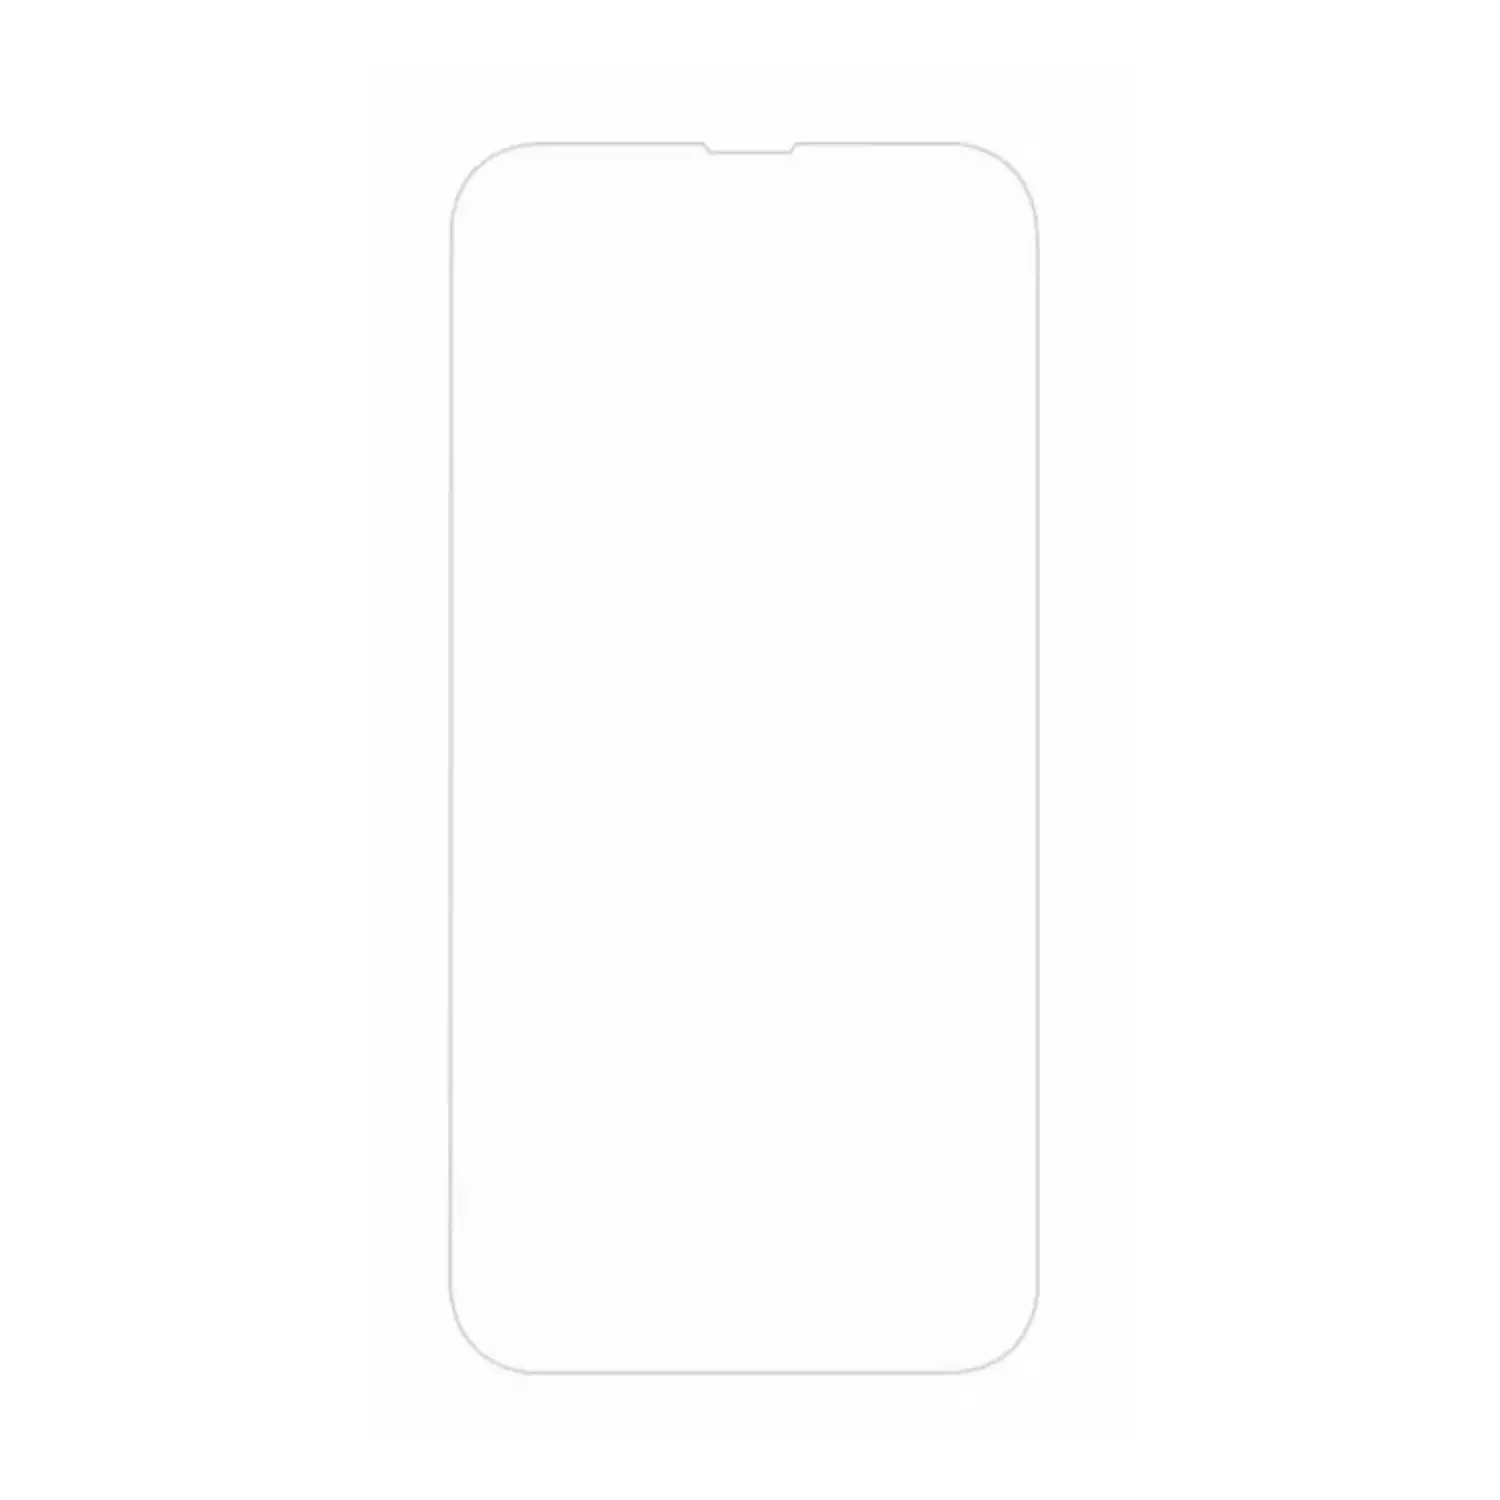 VOCTUS iPhone 14 Plus Tempered Glass Screen Protector 2Pcs (Box)